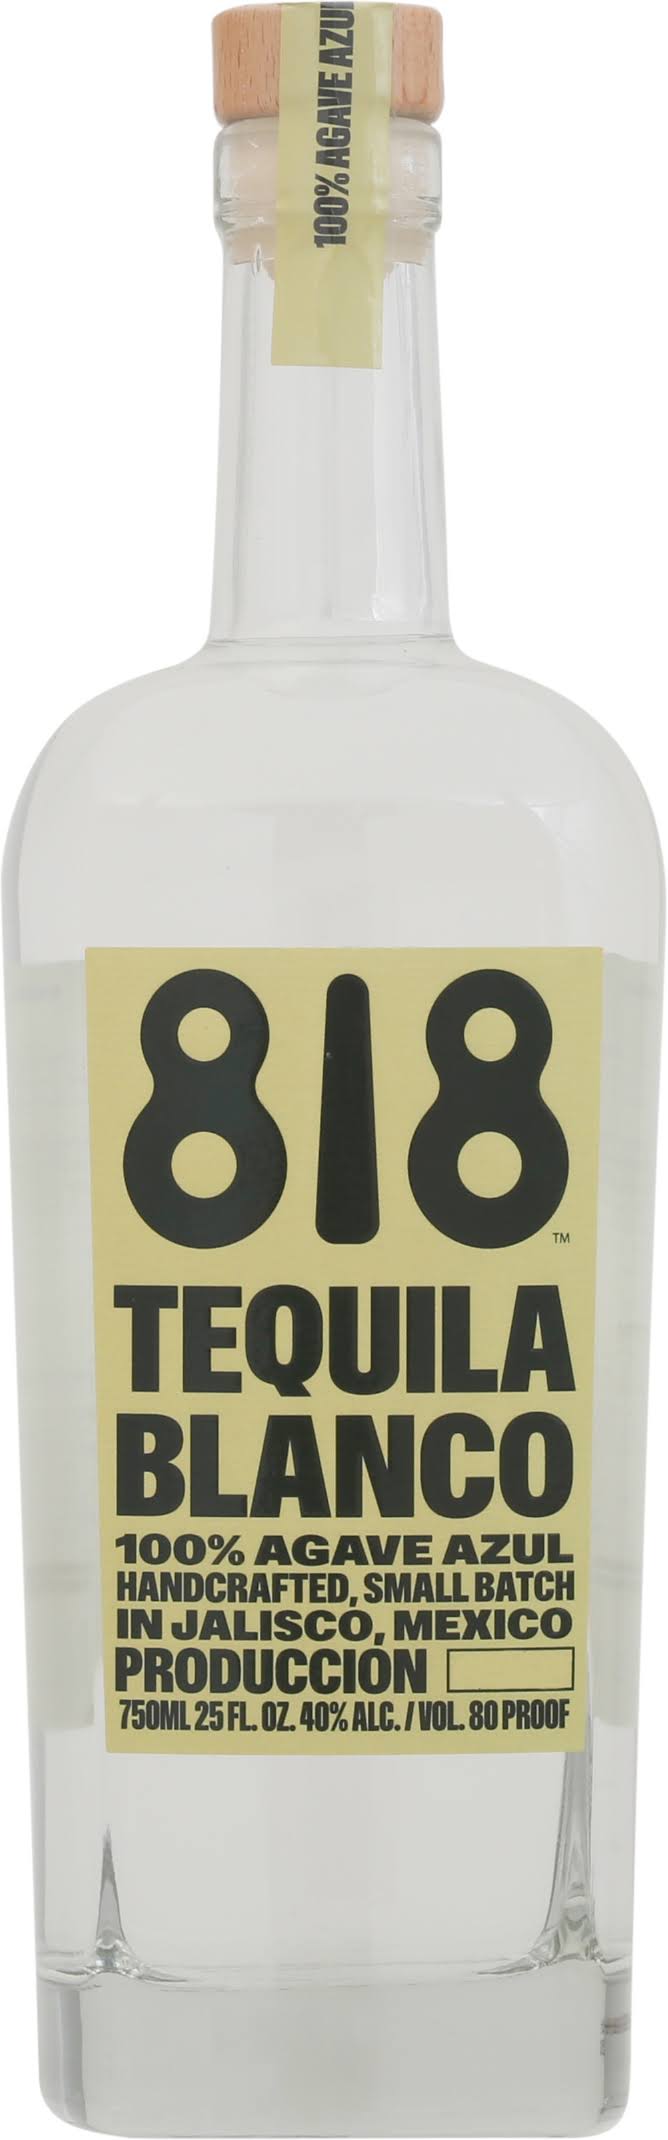 818 Tequila Blanco - 750 ml